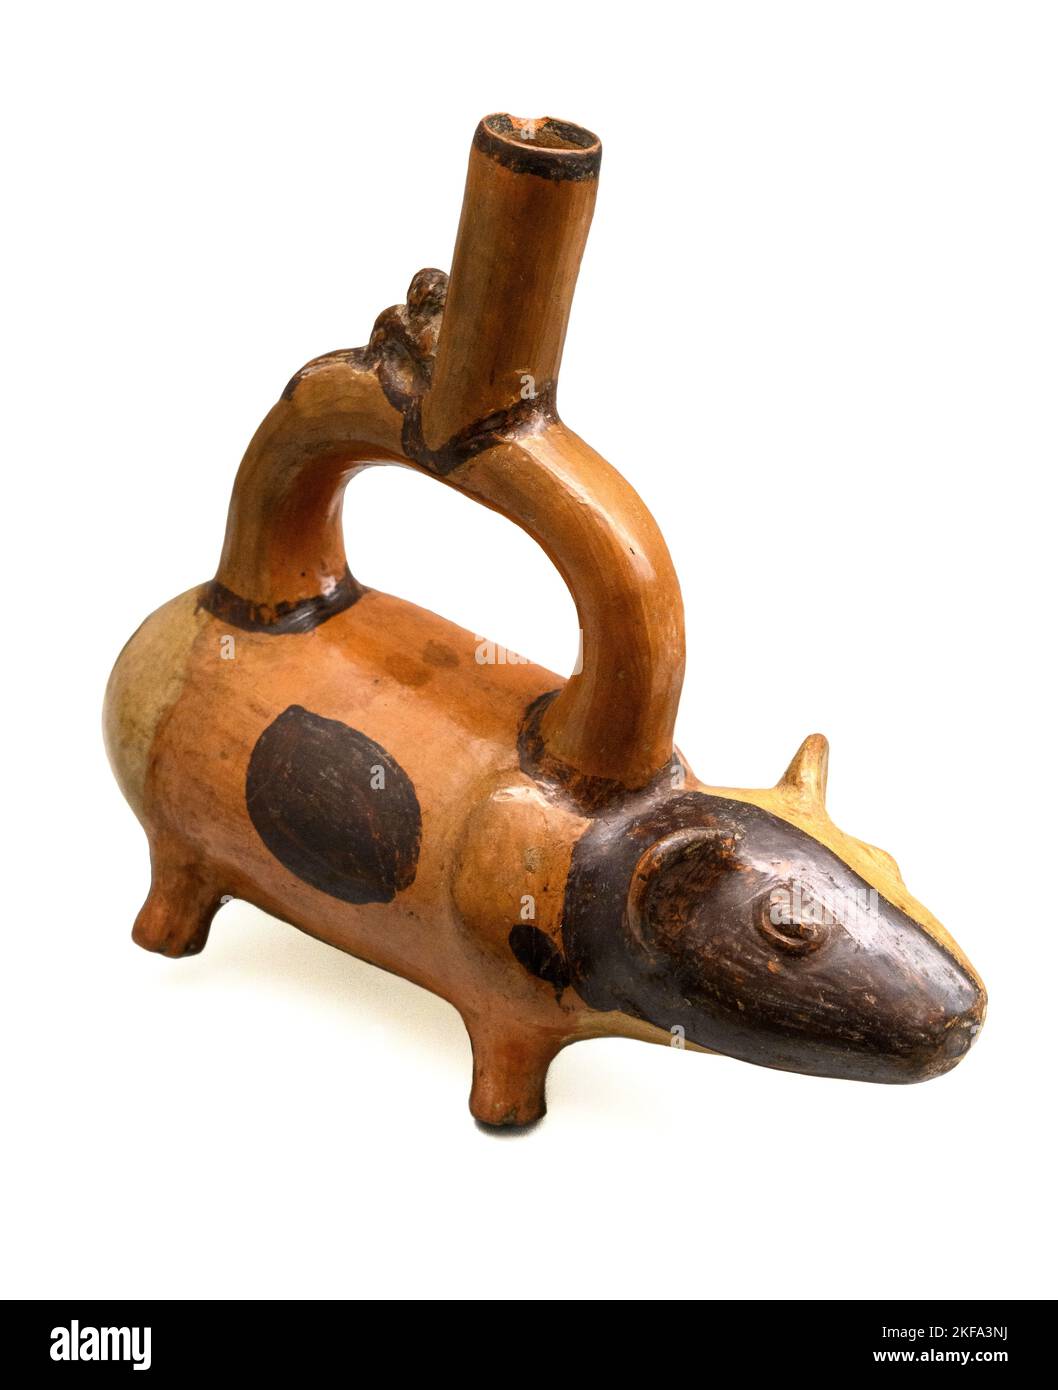 Jarrón o maceta zoomórfica de cerámica que representa un conejo Cui del reino Chimor o cultura Chimu del Perú. Horizonte Intermedio Tardío, entre 1000 Foto de stock